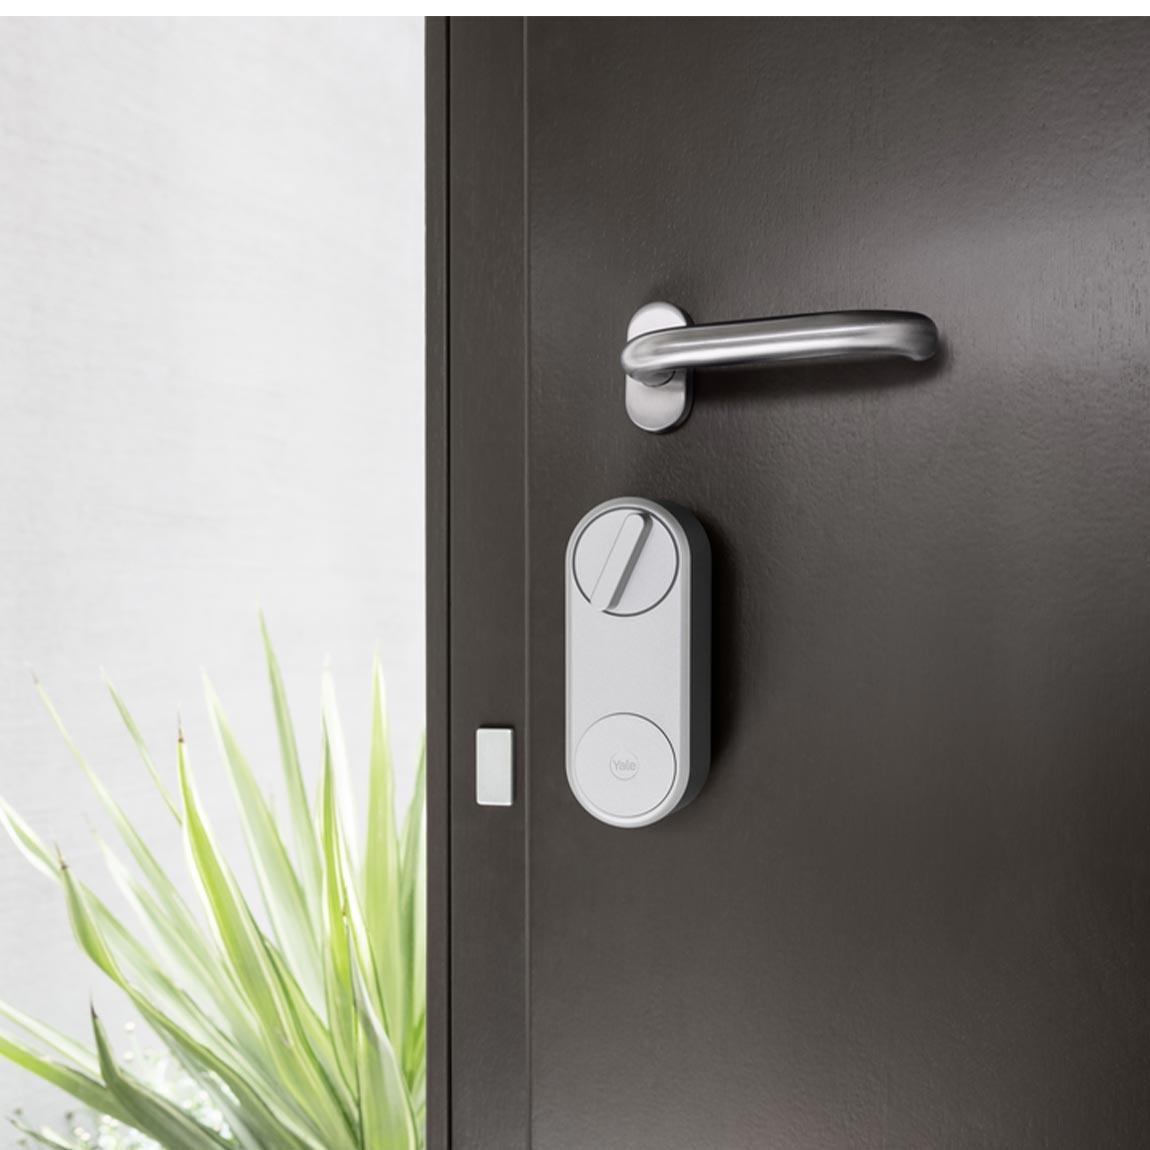 Bosch Smart Home - Set Zutrittskontrolle_Lifestyle_Yale Lock an Tür